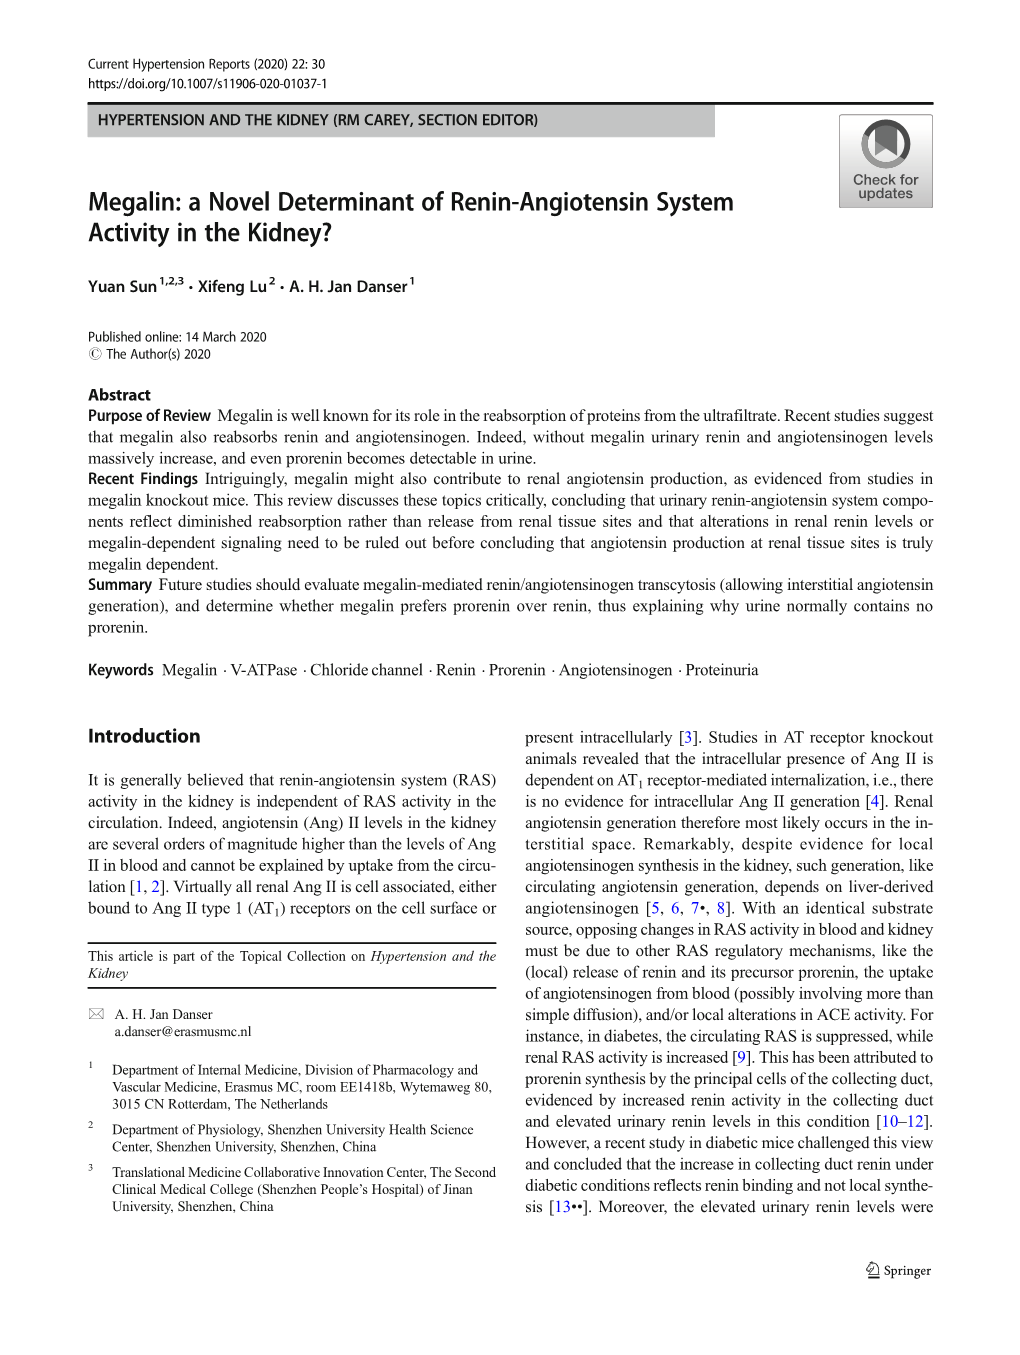 Megalin: a Novel Determinant of Renin-Angiotensin System Activity in the Kidney?